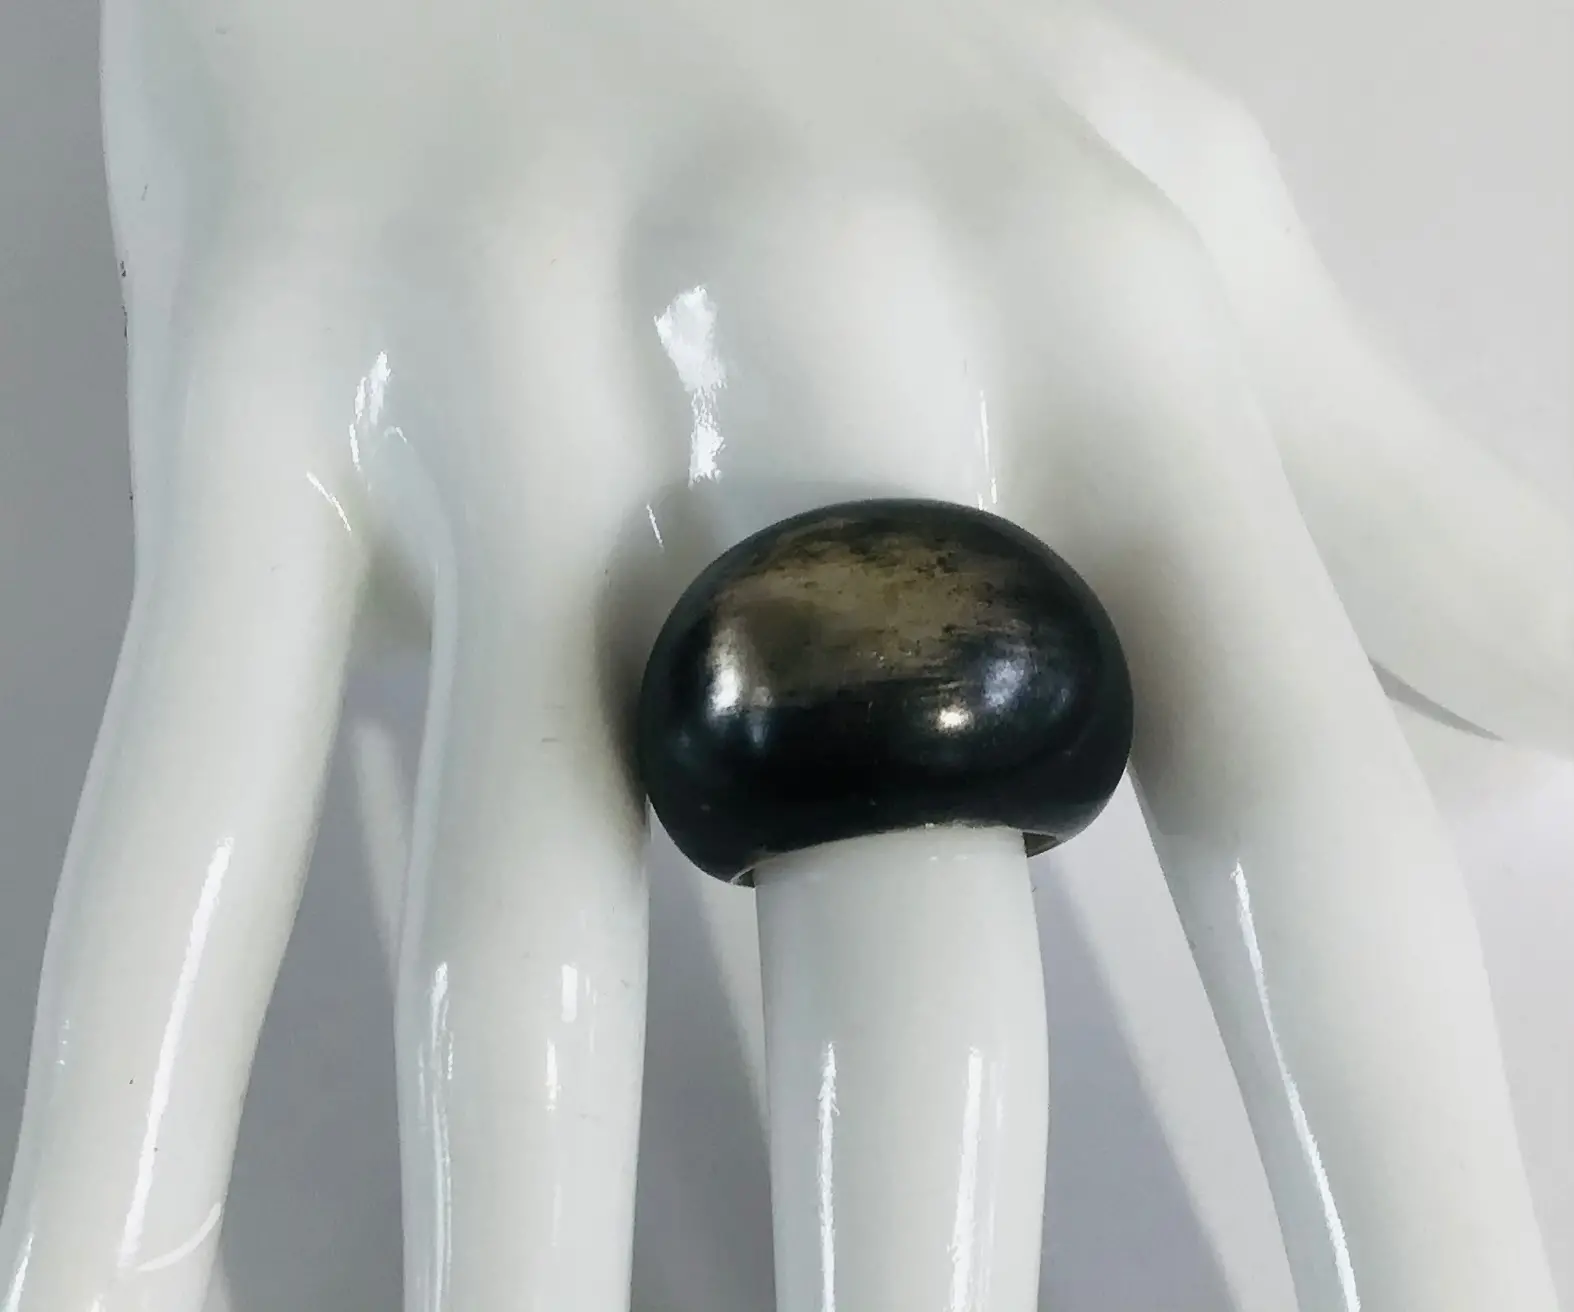 Maria Black ring